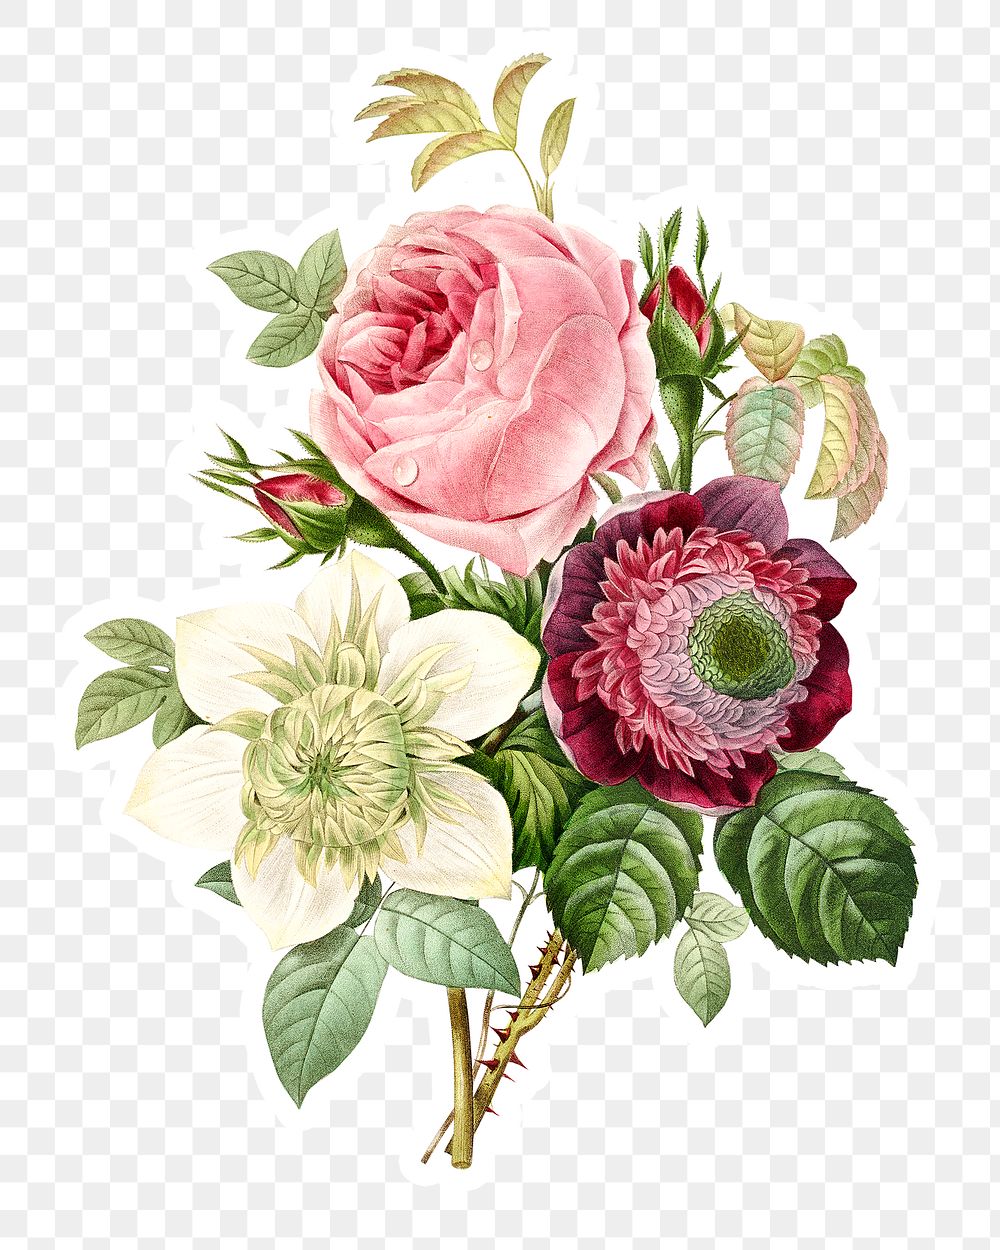 Cabbage rose and anemone flower sticker design element 